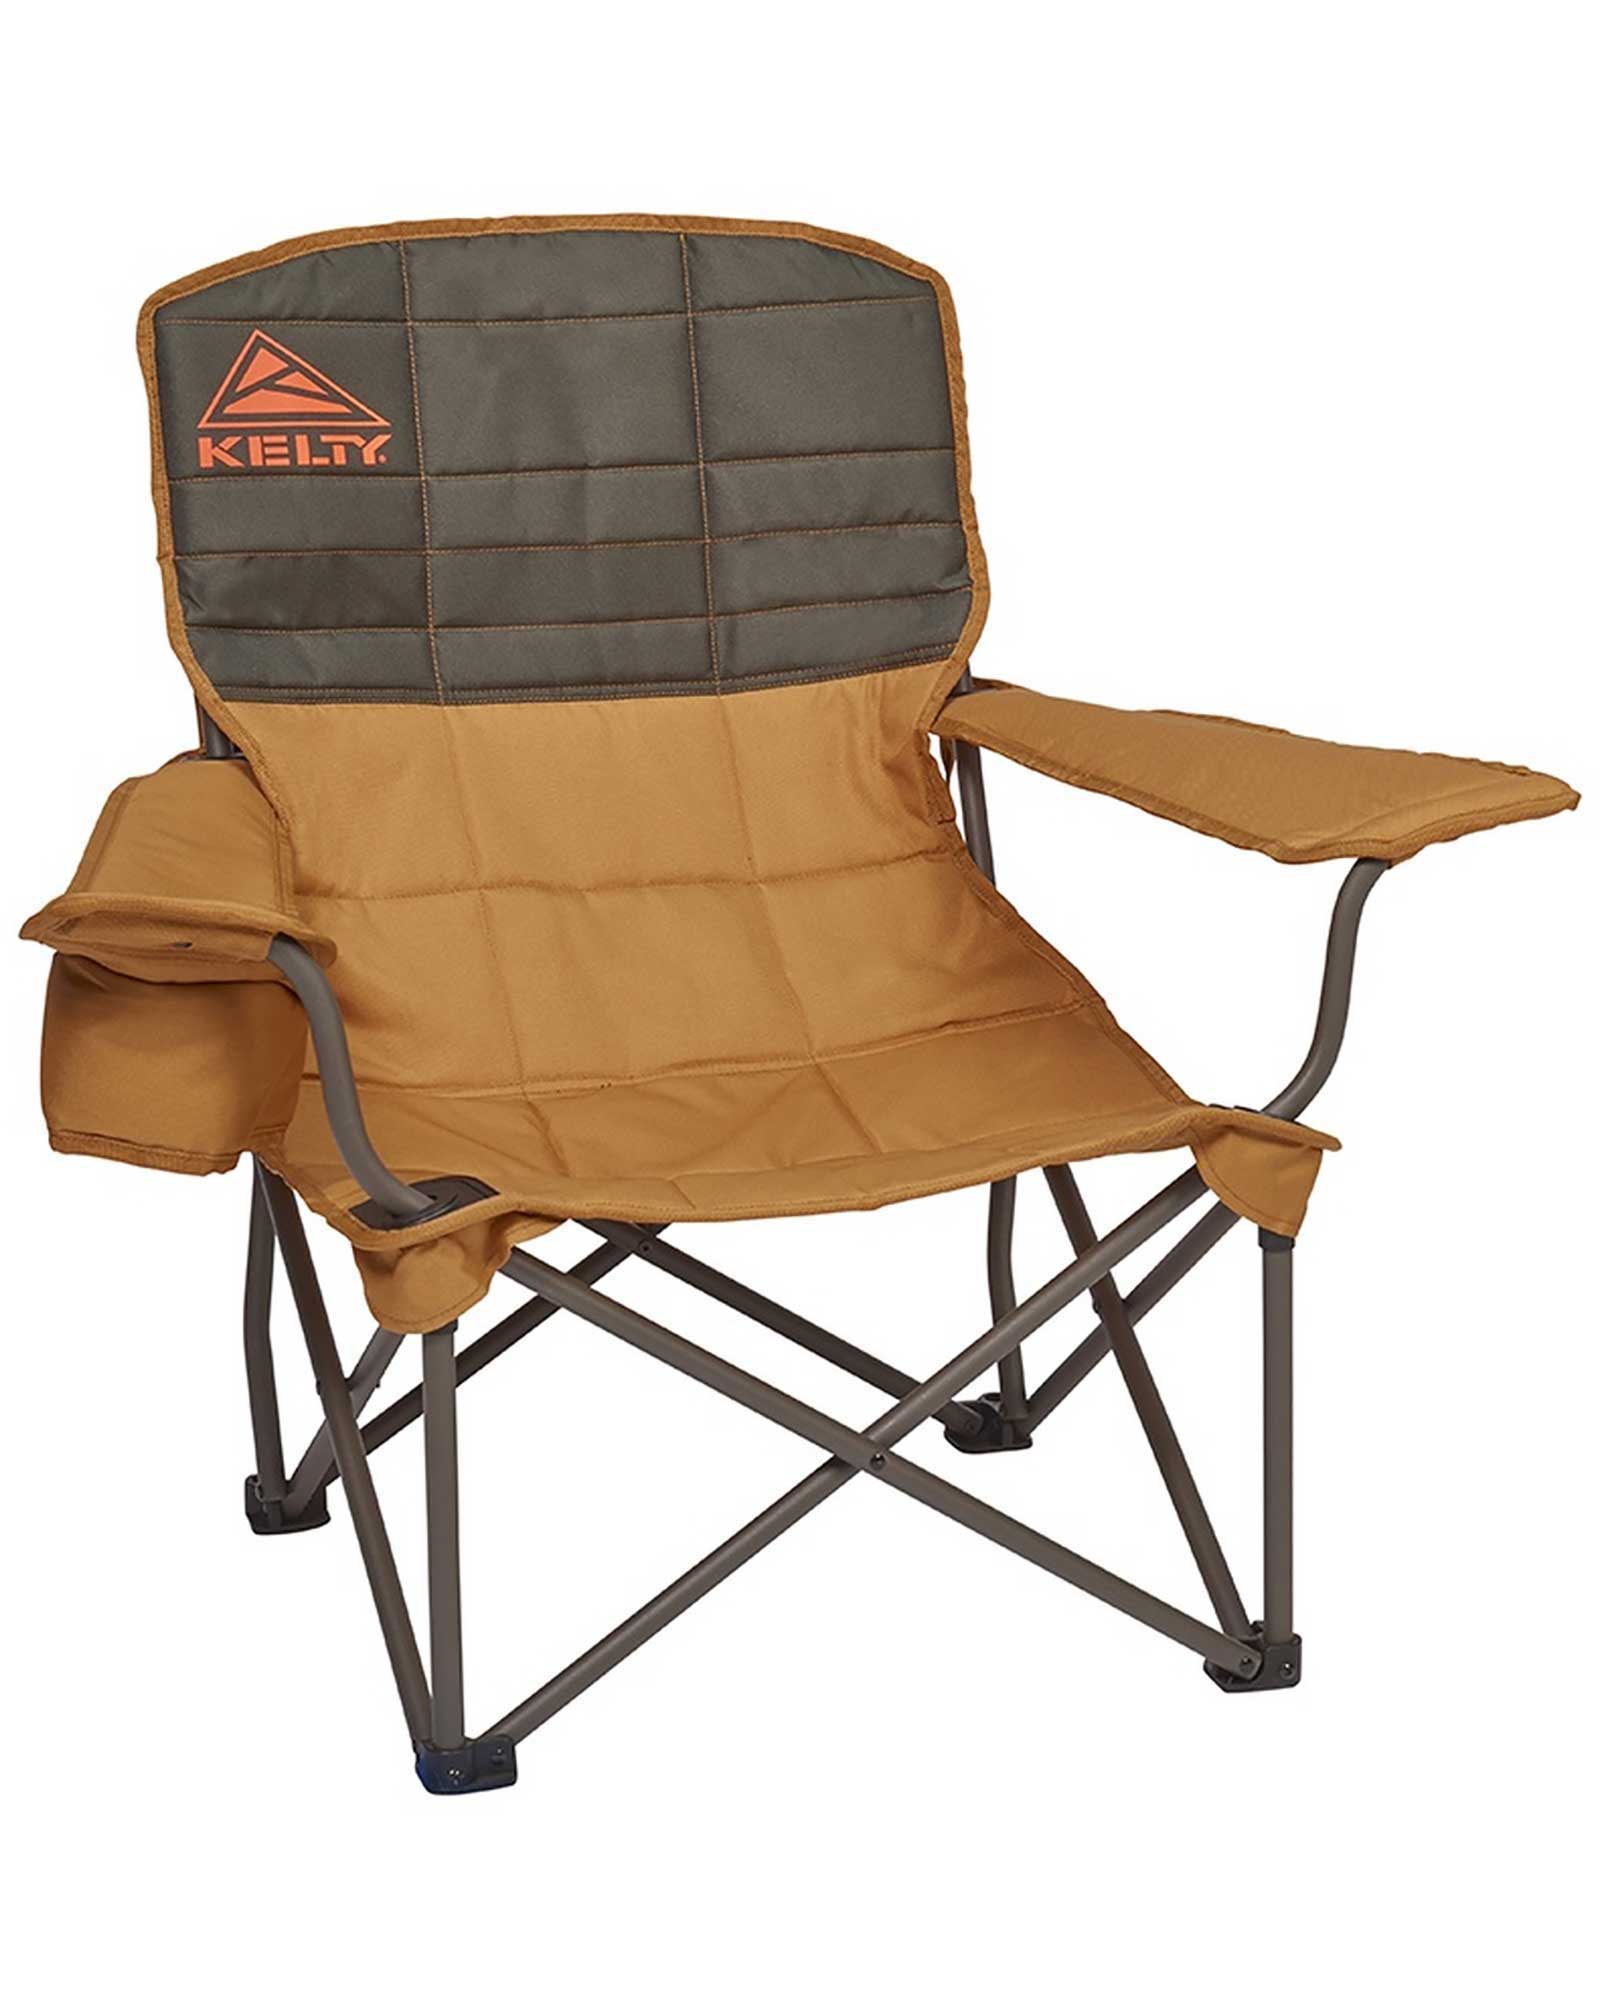 Kelty Lowdown Chair - Canyon Brown/Beluga